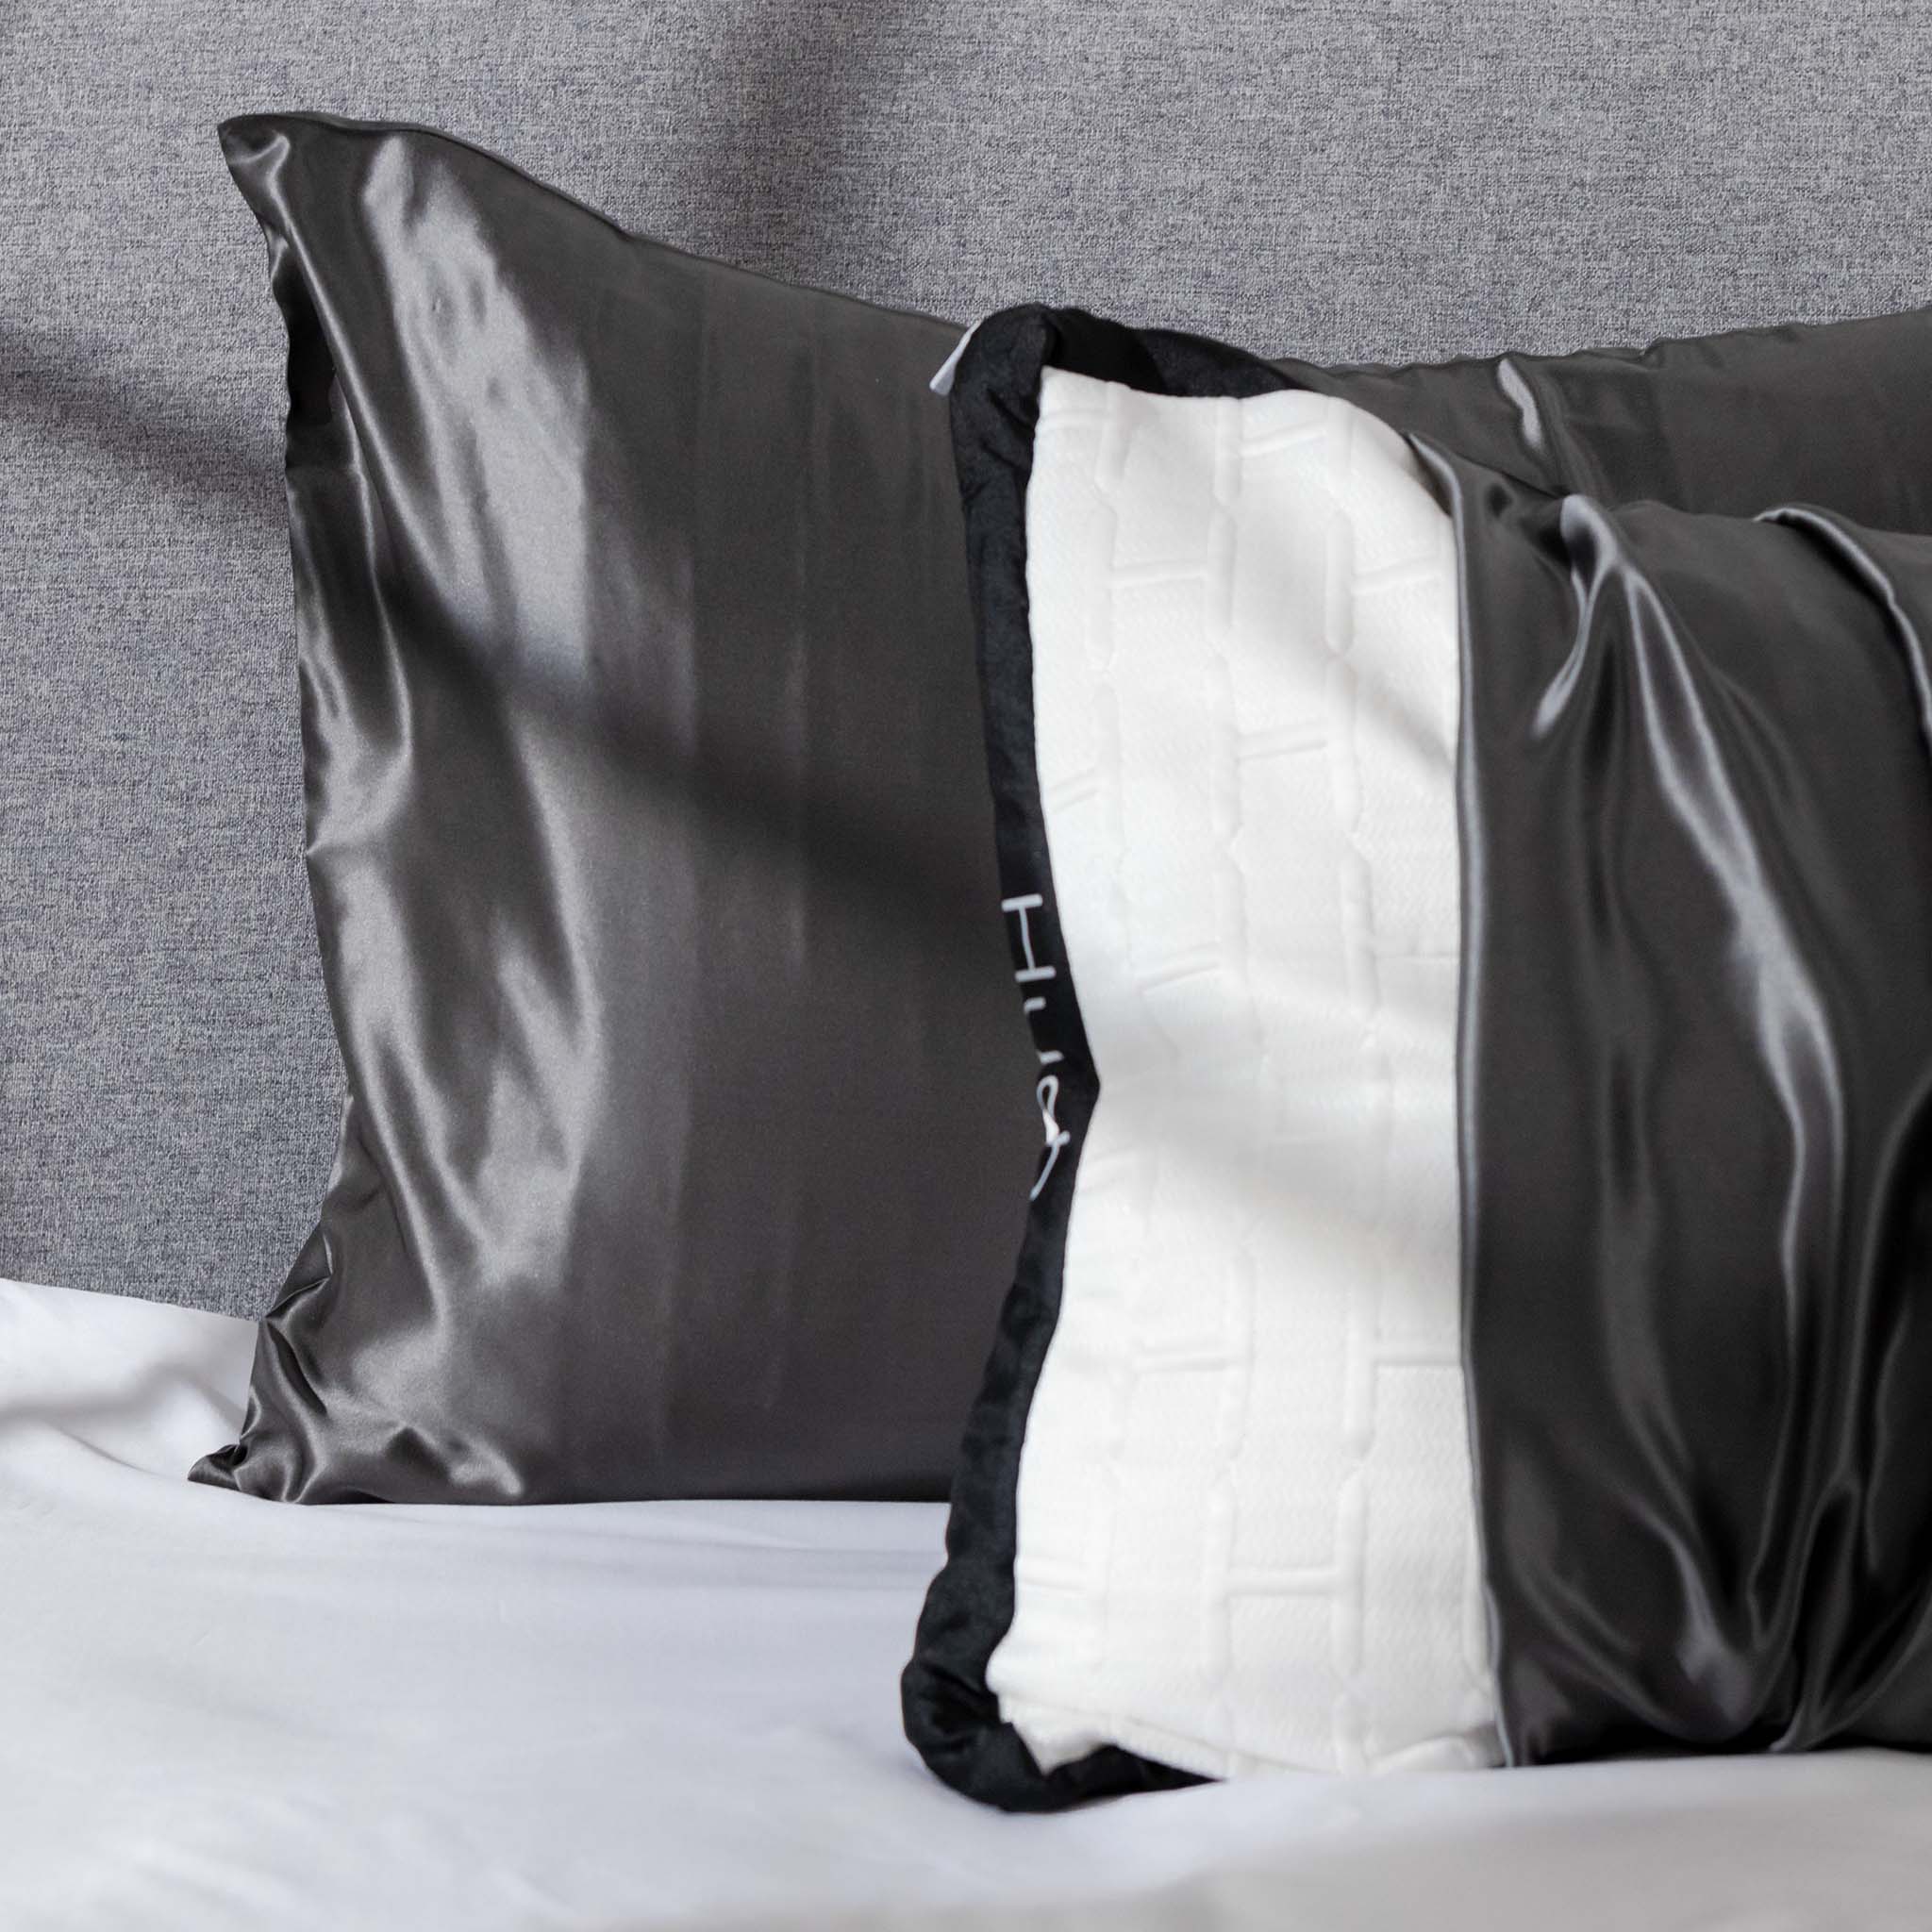 Pillow Talk Nightgown Set in Black (Short)